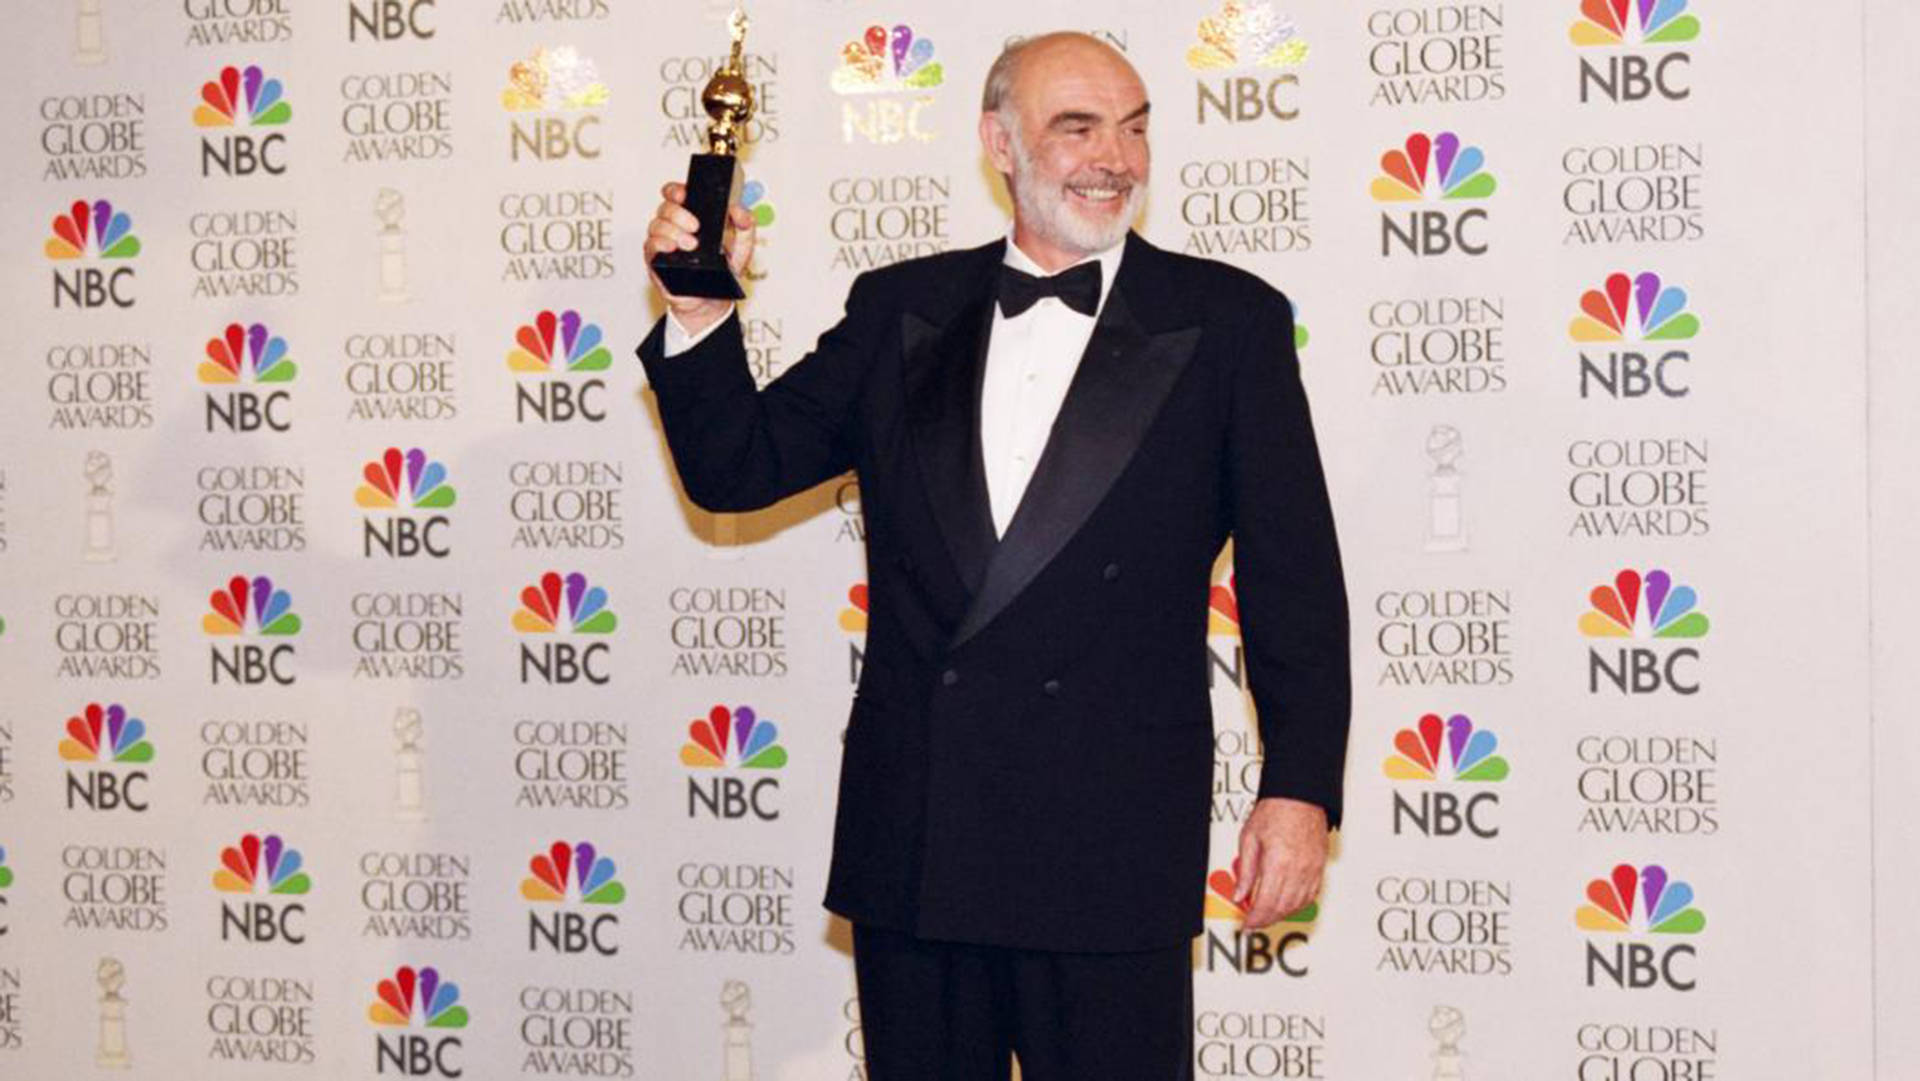 Sean Connery Golden Globe Awards Background